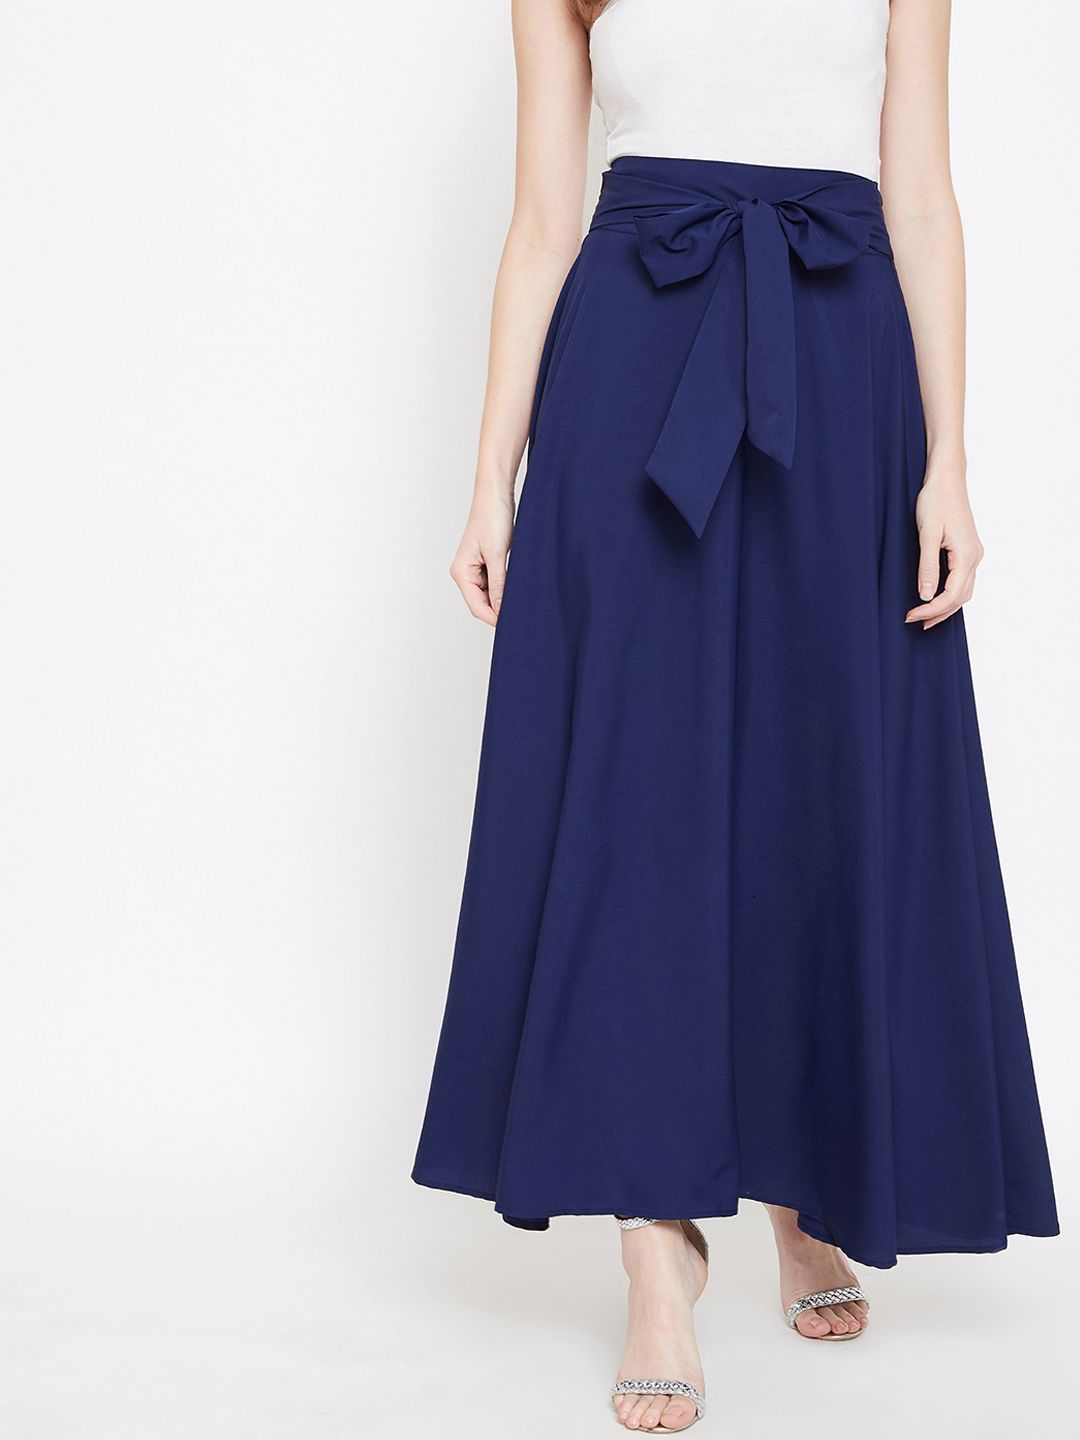 Berrylush Navy Blue Bow-Tie High-Waist Maxi Skirt Price in India